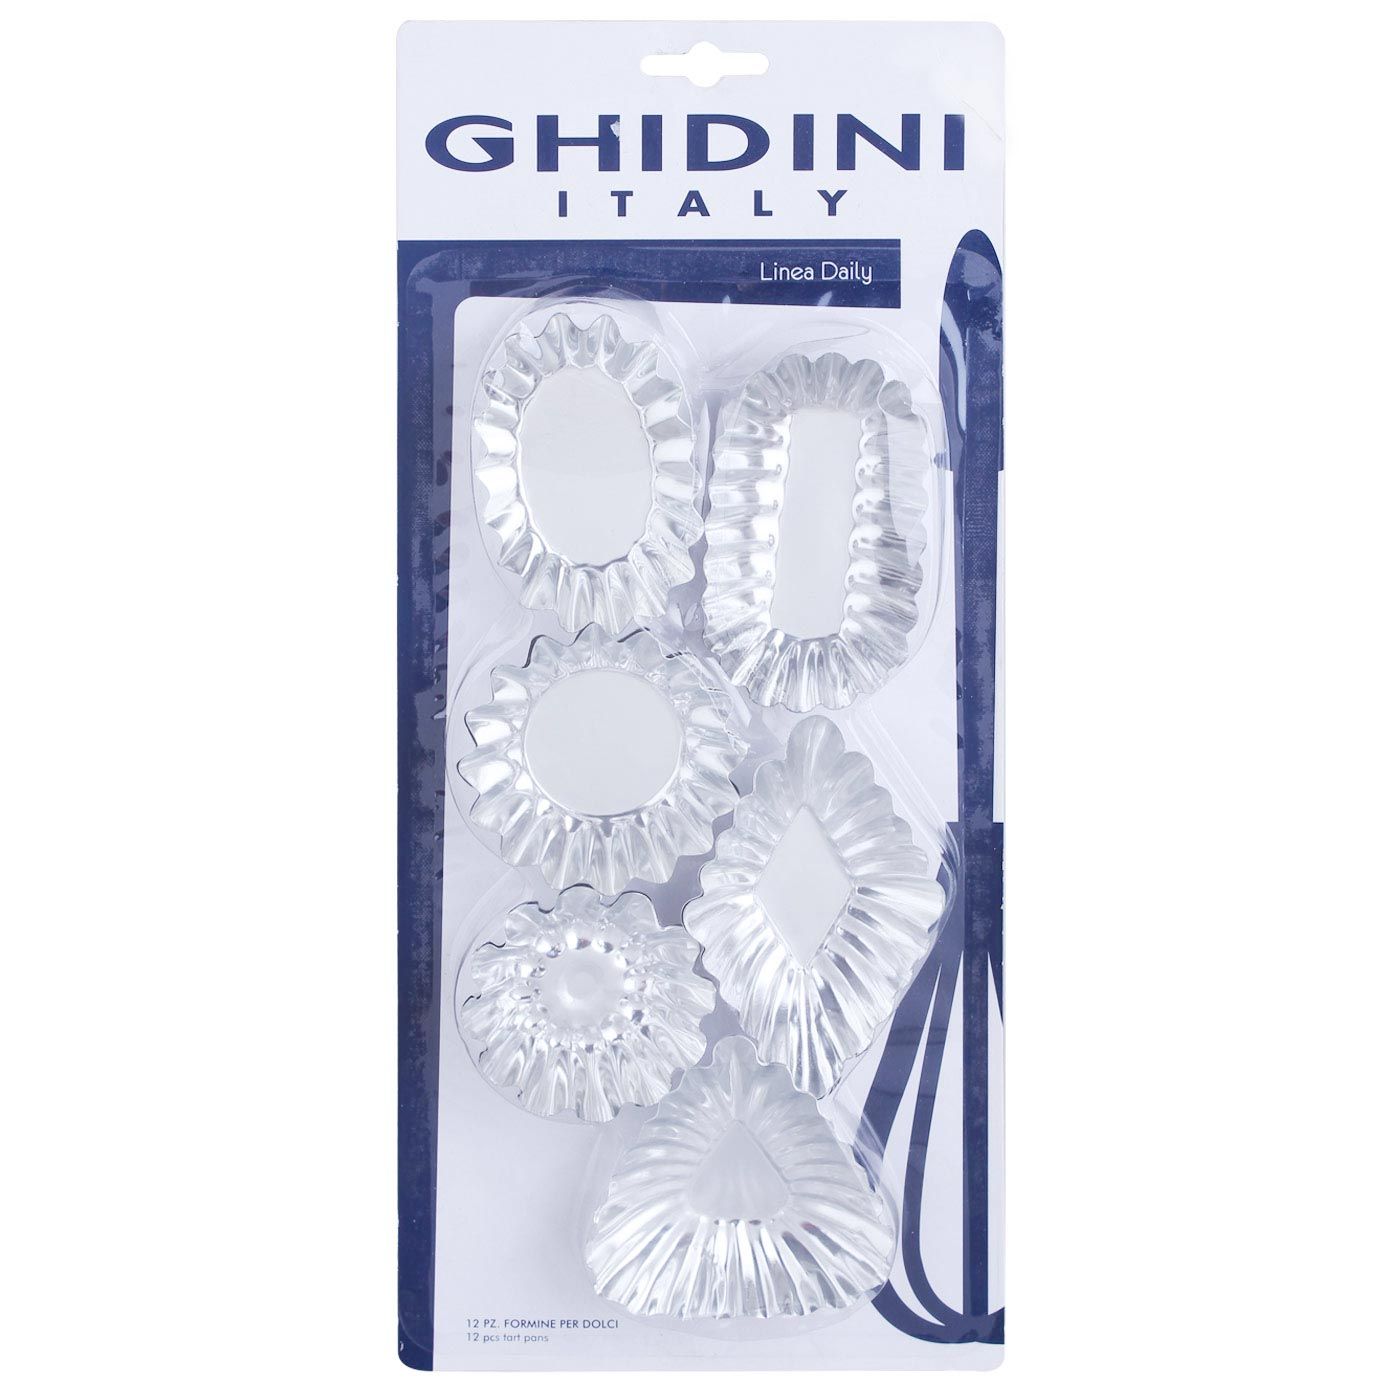 Ghidini Tart Pans Carded Chrome 12 Pcs - 1